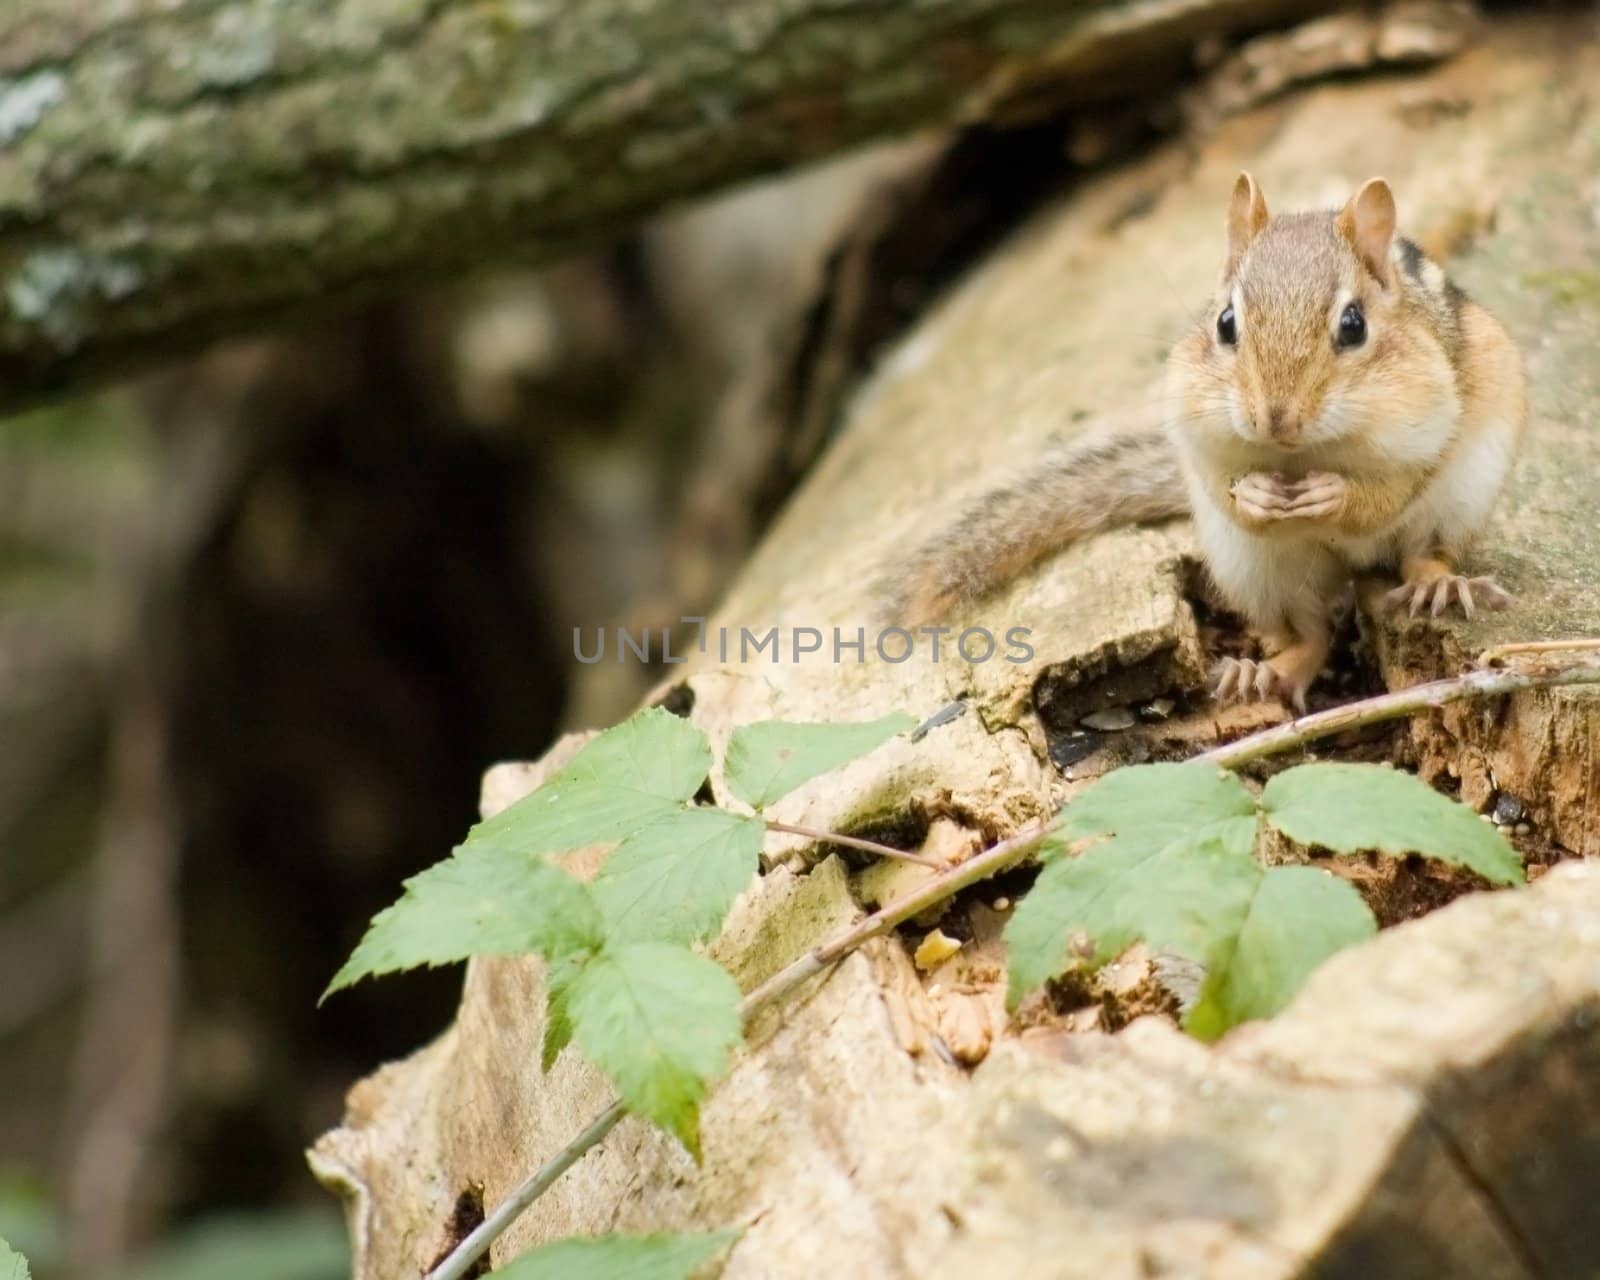 A chipmunk on a log eating a nut.